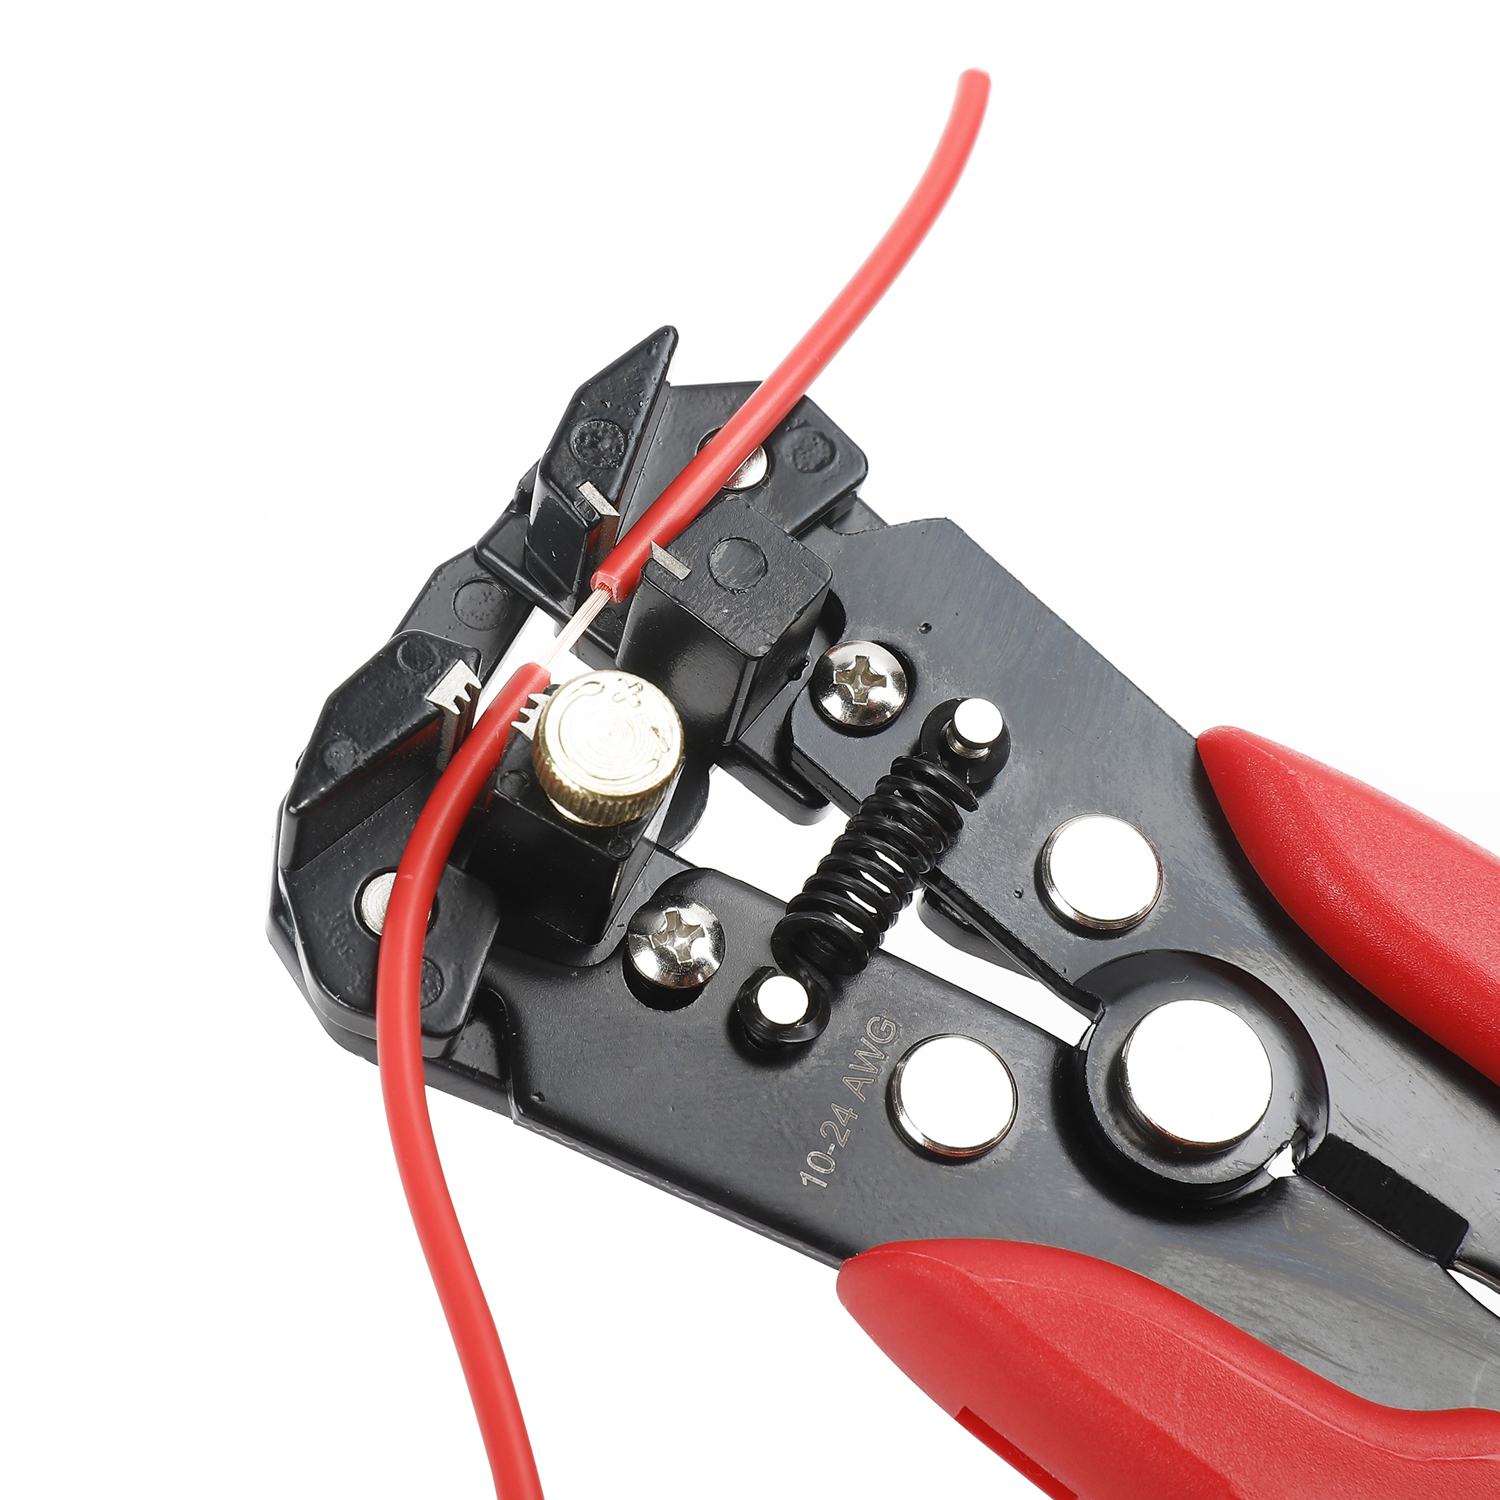 EverStart 8-inch Self Adjusting Wire Stripper, Model 5138, Black ,Red, UL Listed, New - image 4 of 10